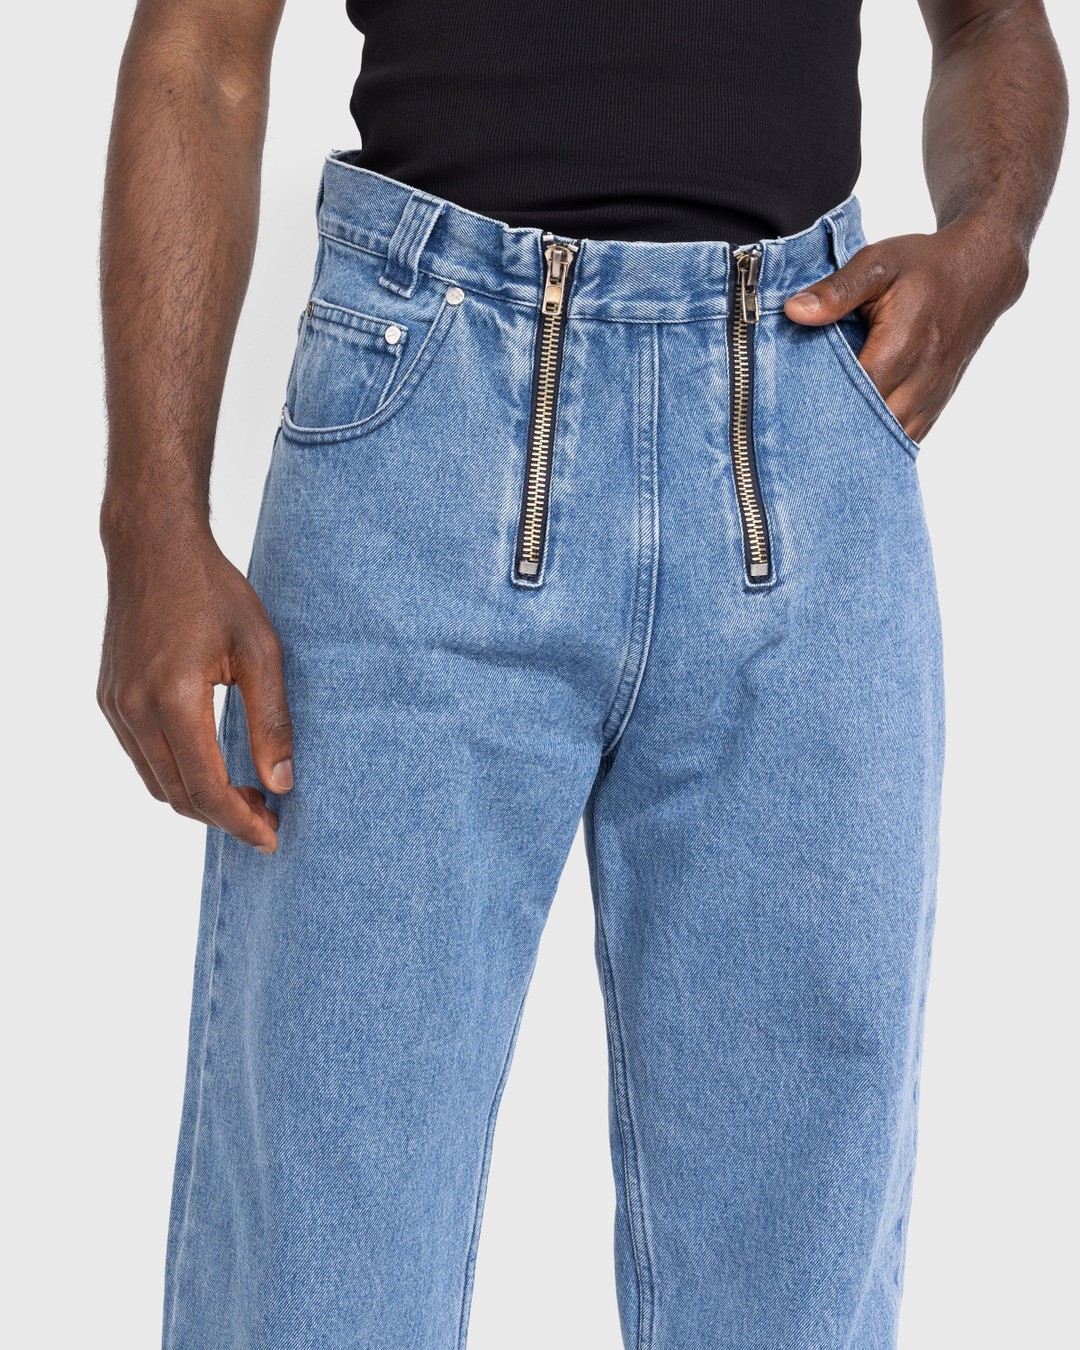 GmbH – Cyrus Denim Trousers Indigo Blue - Pants - Blue - Image 4